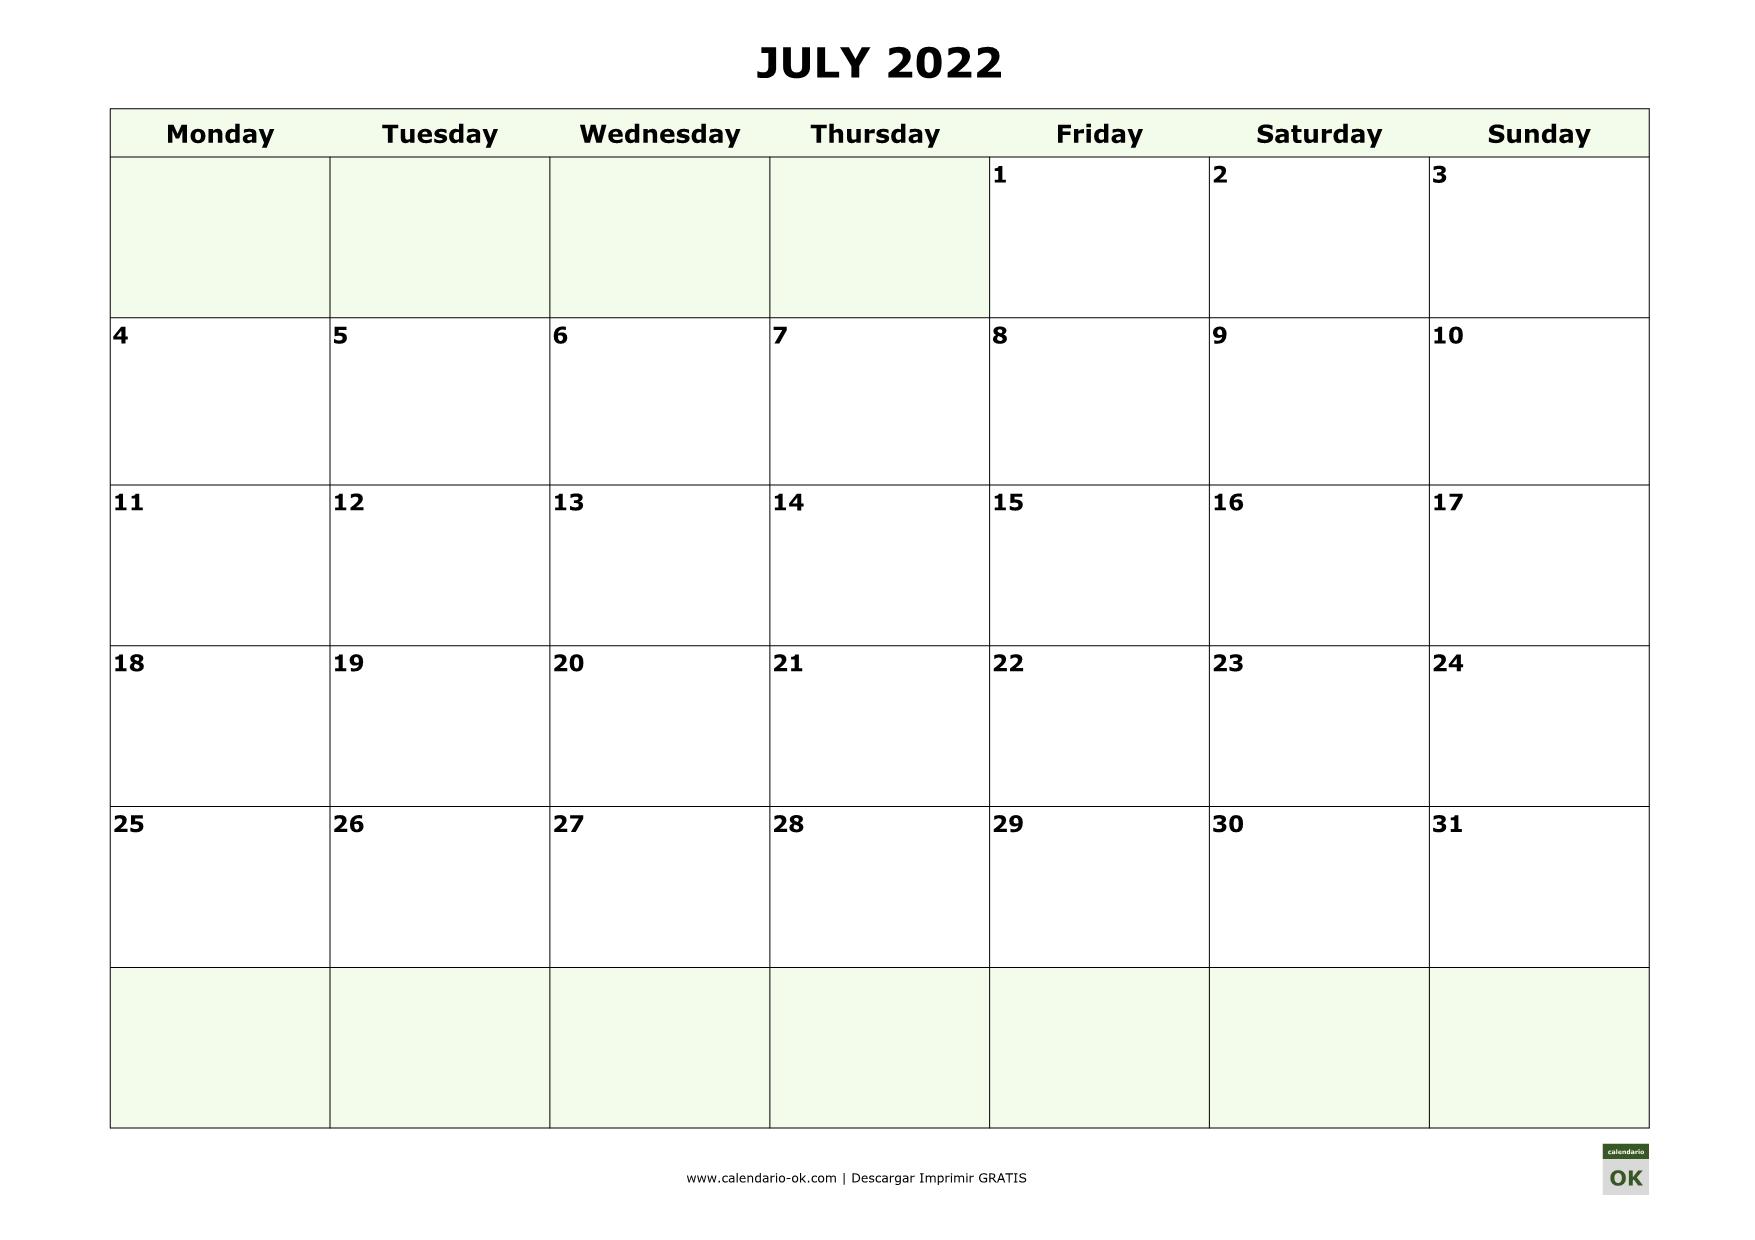 JULIO 2022 calendario en INGLES